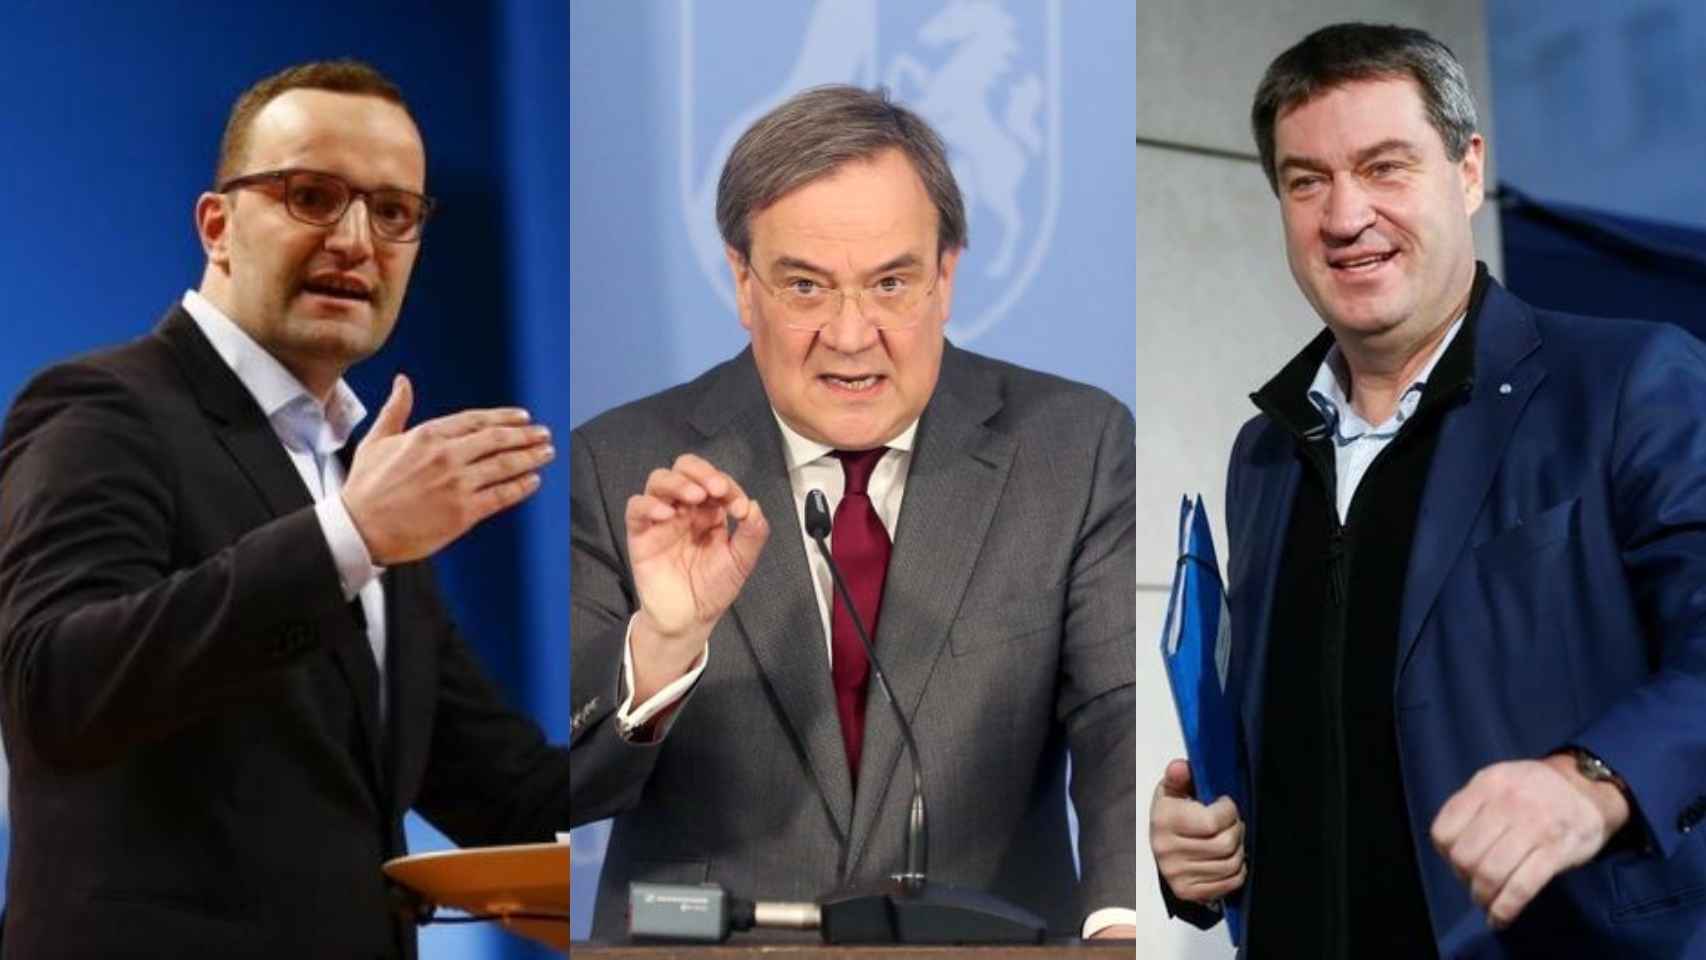 Jens Spahn, Armin Laschet y Markus Söder, posibles candidatos a suceder a Angela Merkel.